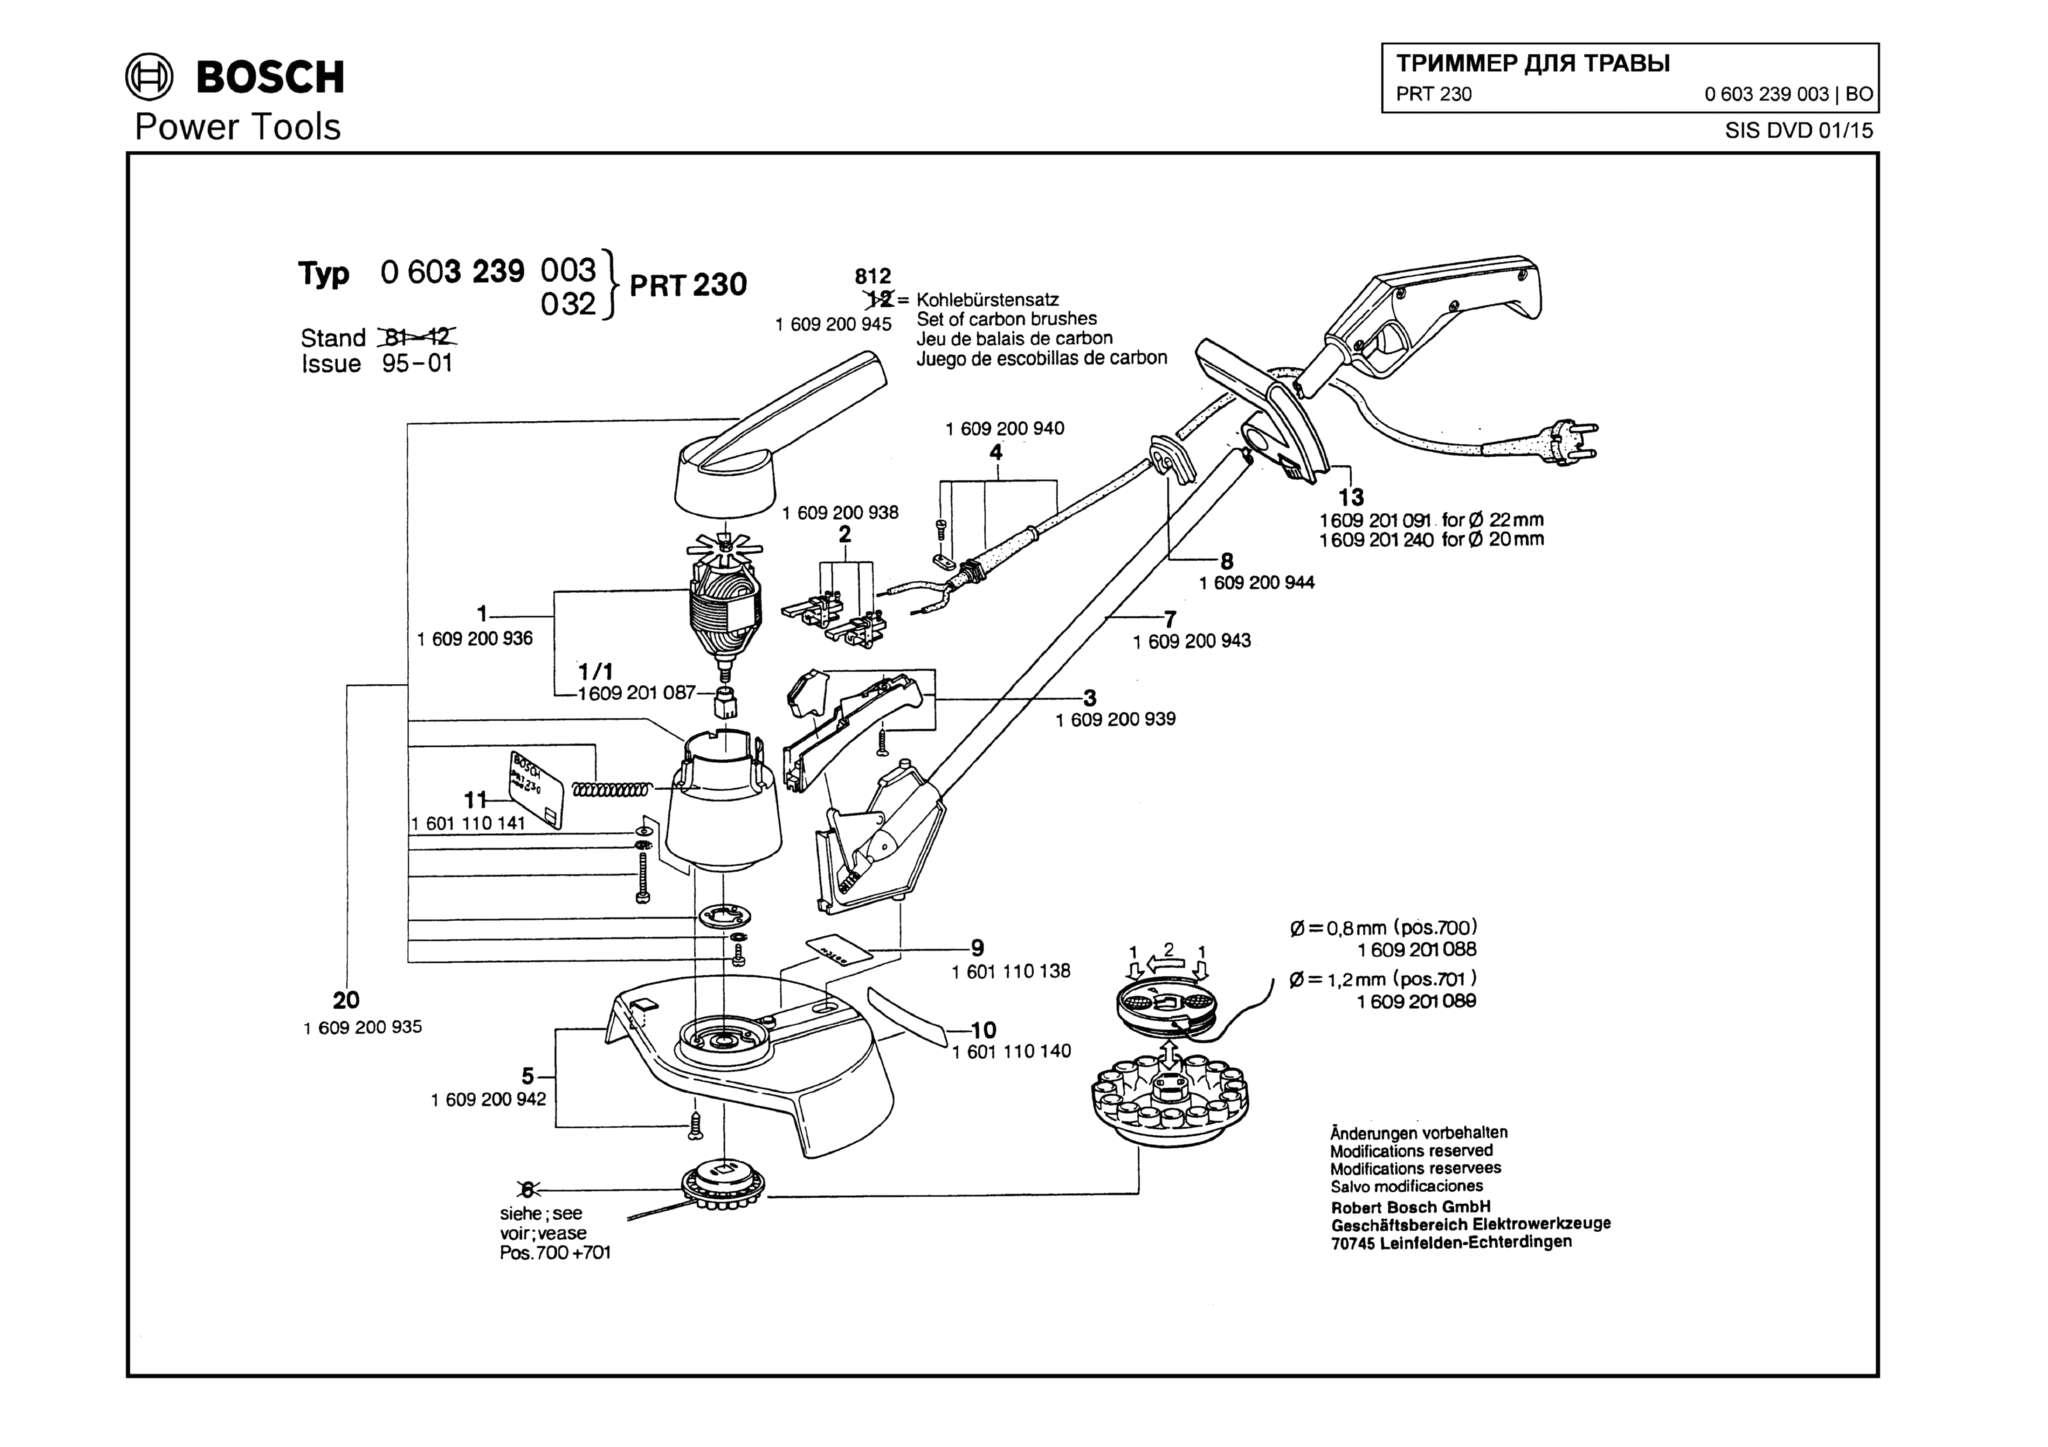 Запчасти, схема и деталировка Bosch PRT 230 (ТИП 0603239003)